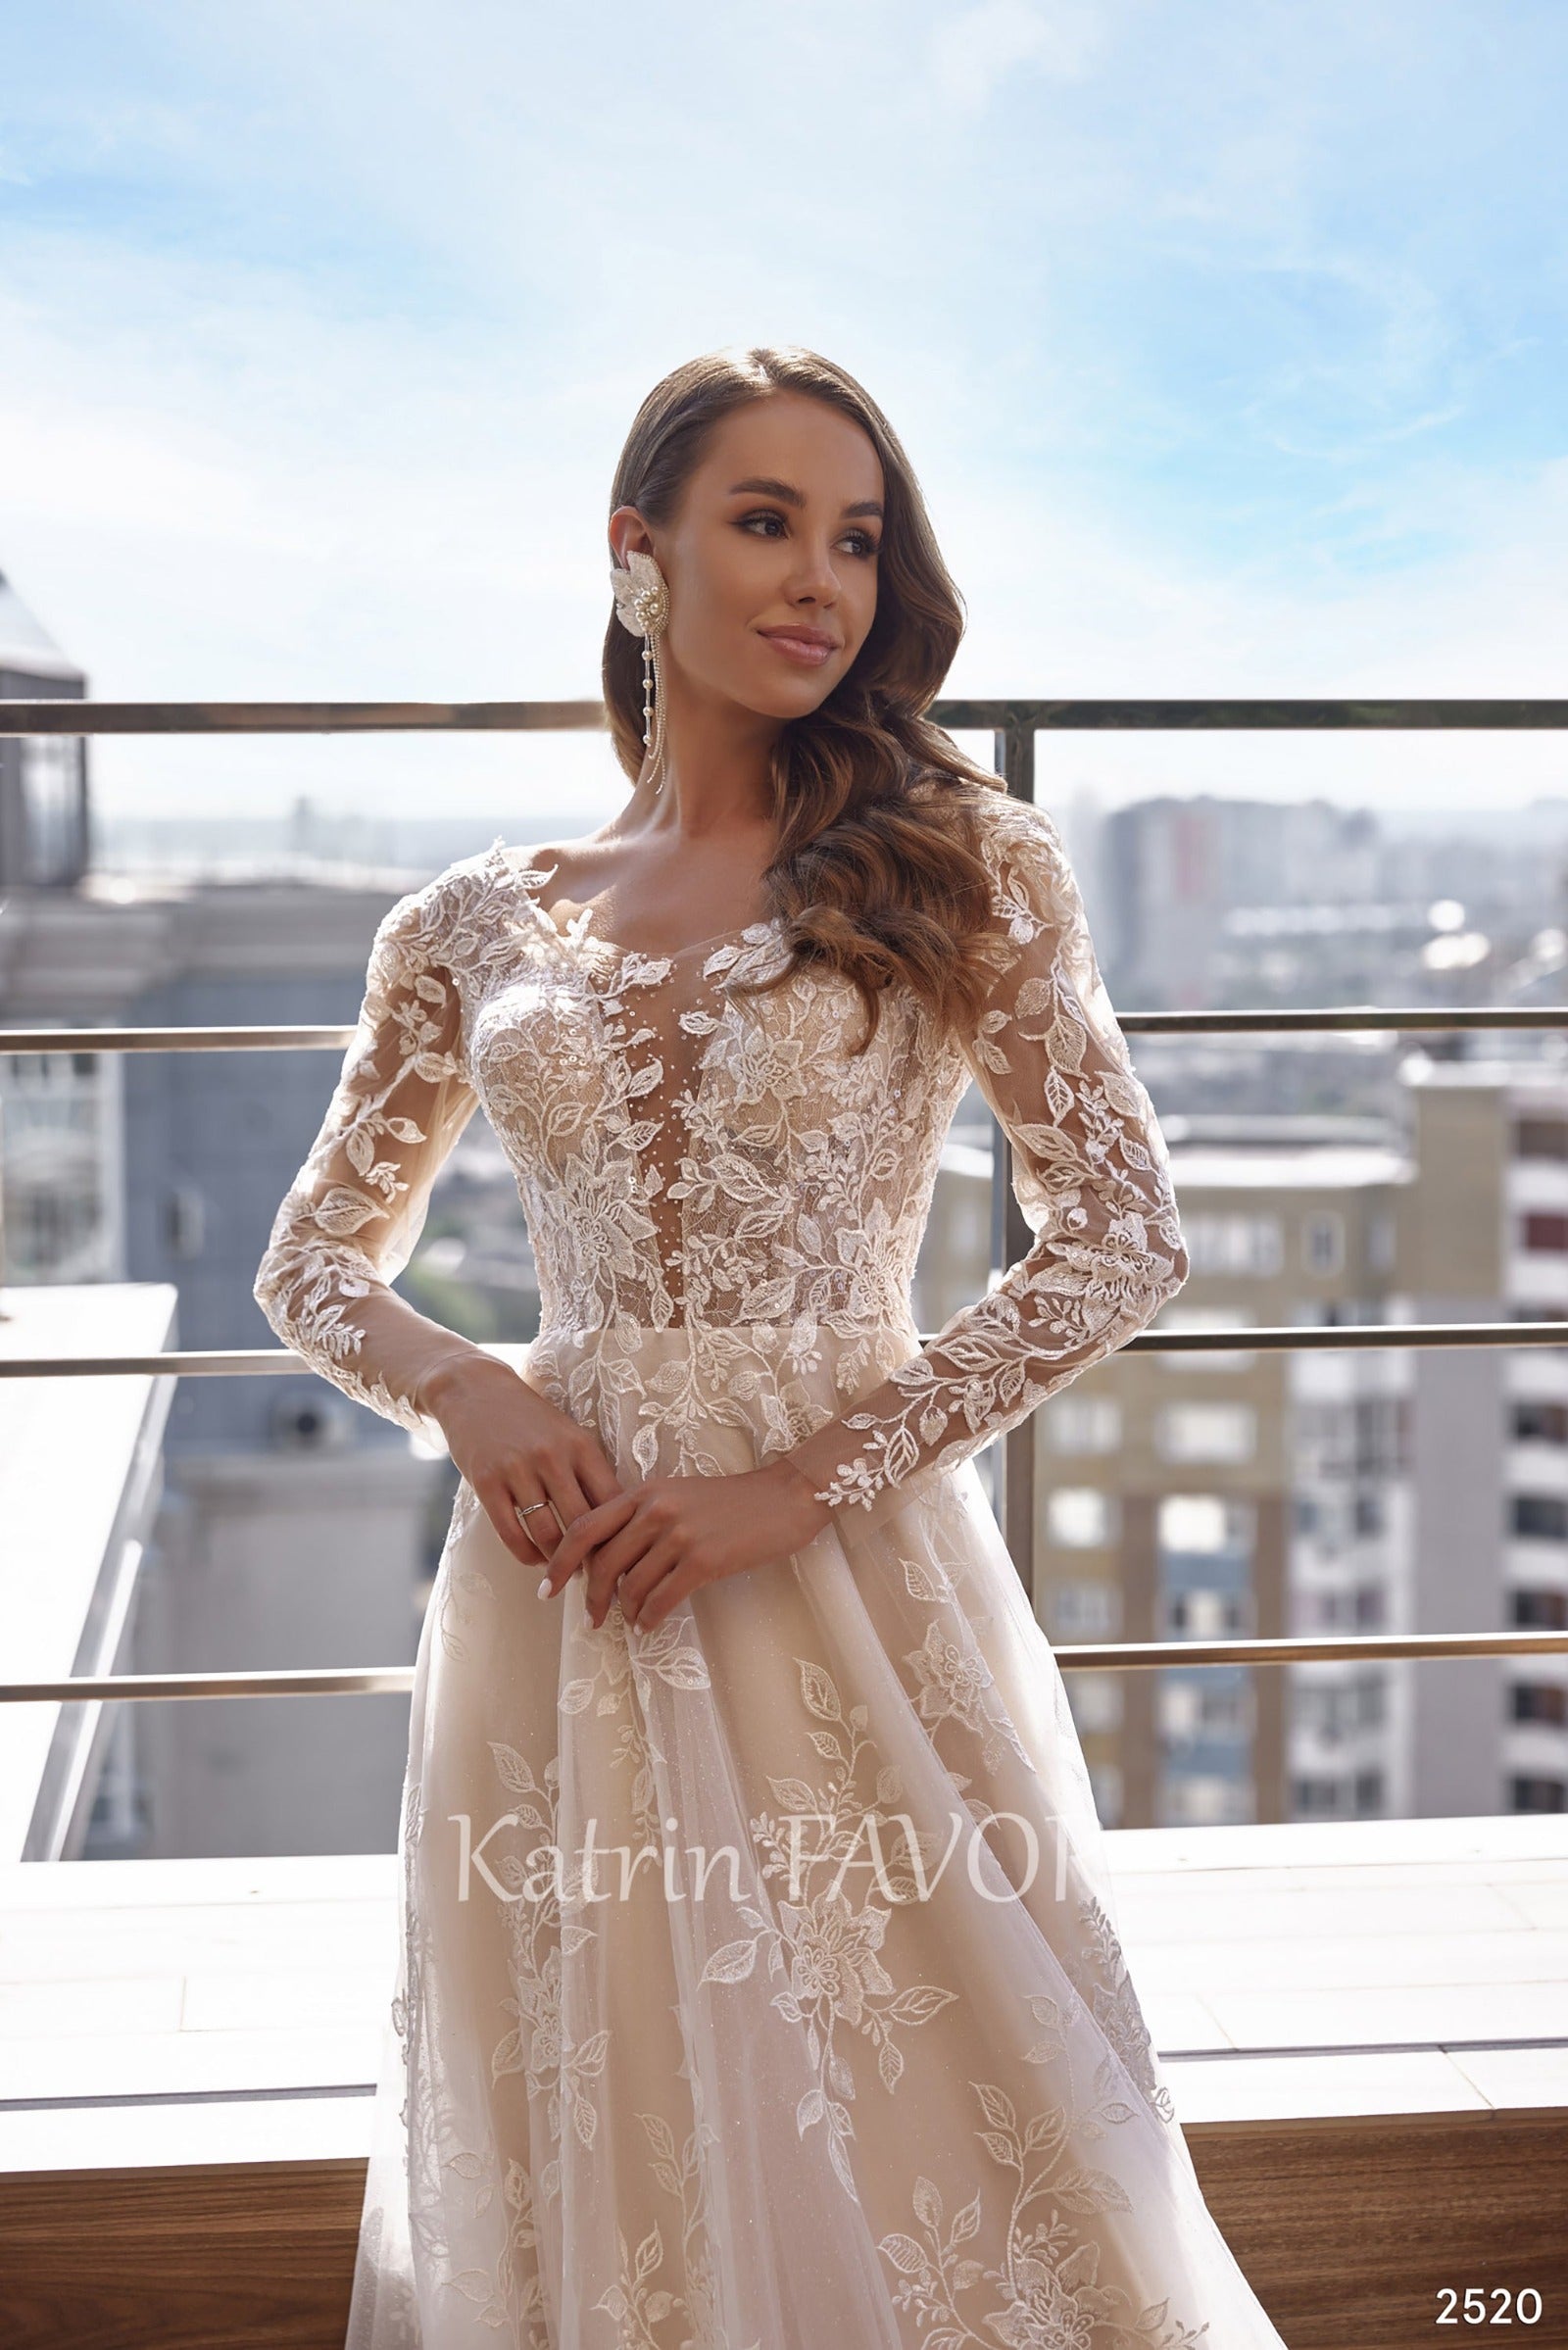 KatrinFAVORboutique-Floral lace long sleeve wedding dress